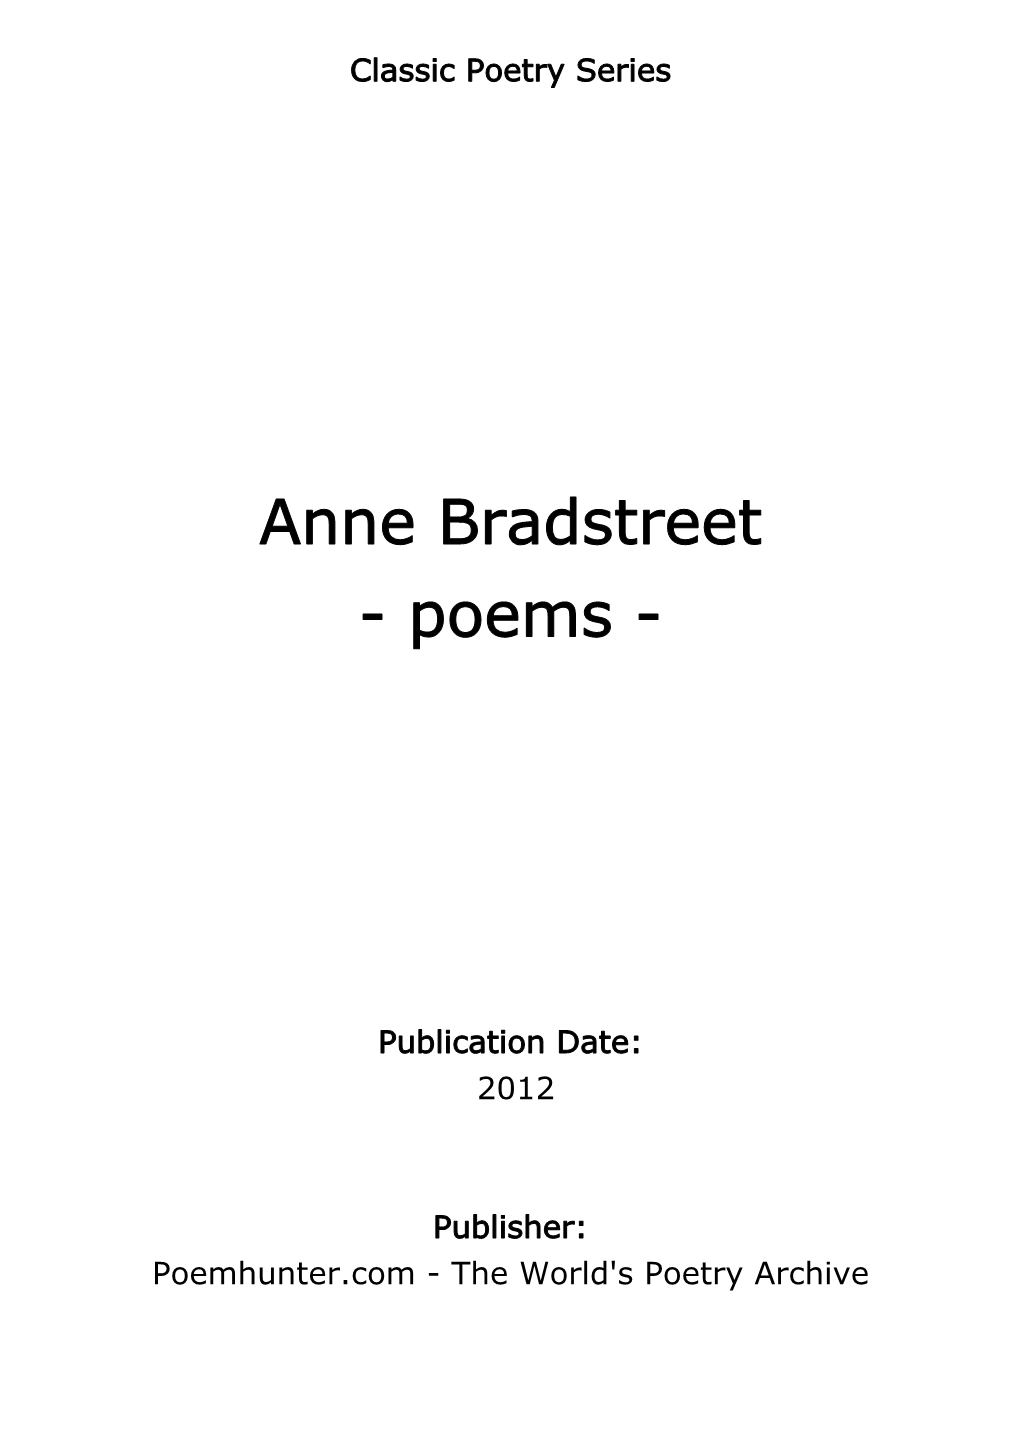 Anne Bradstreet - Poems